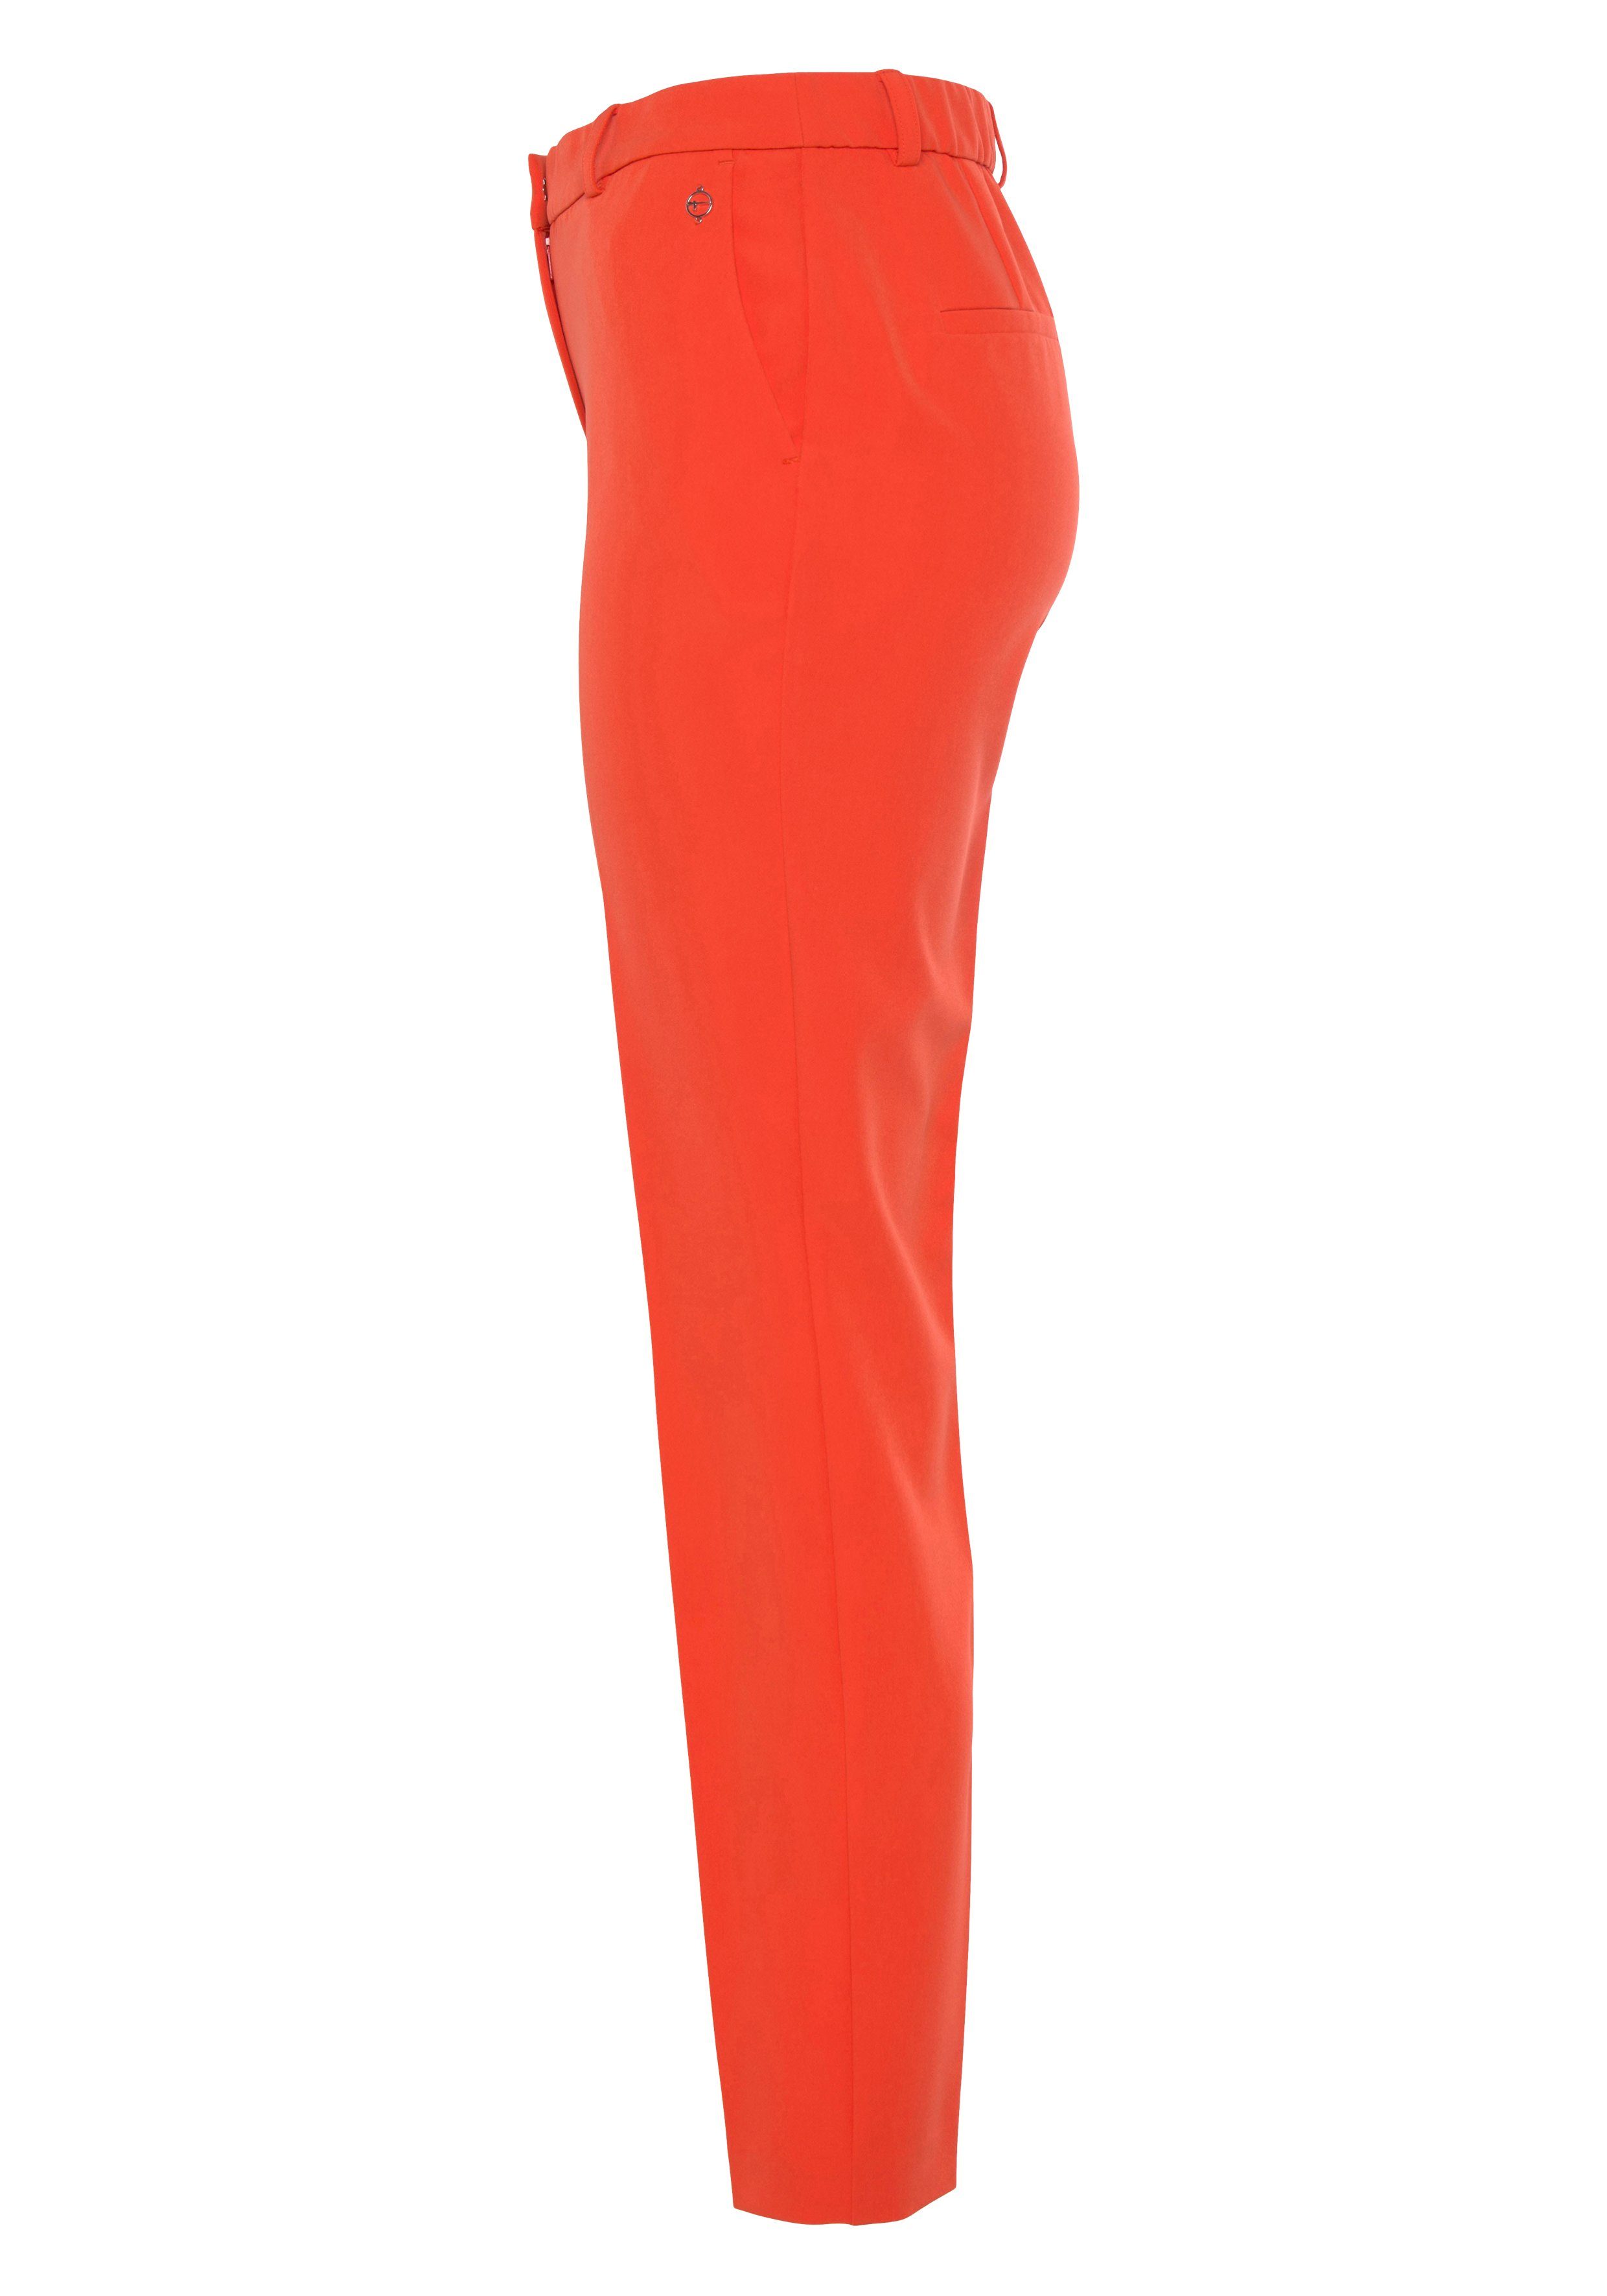 Tamaris Anzughose (Hose in aus Material) Trendfarben orange nachhaltigem